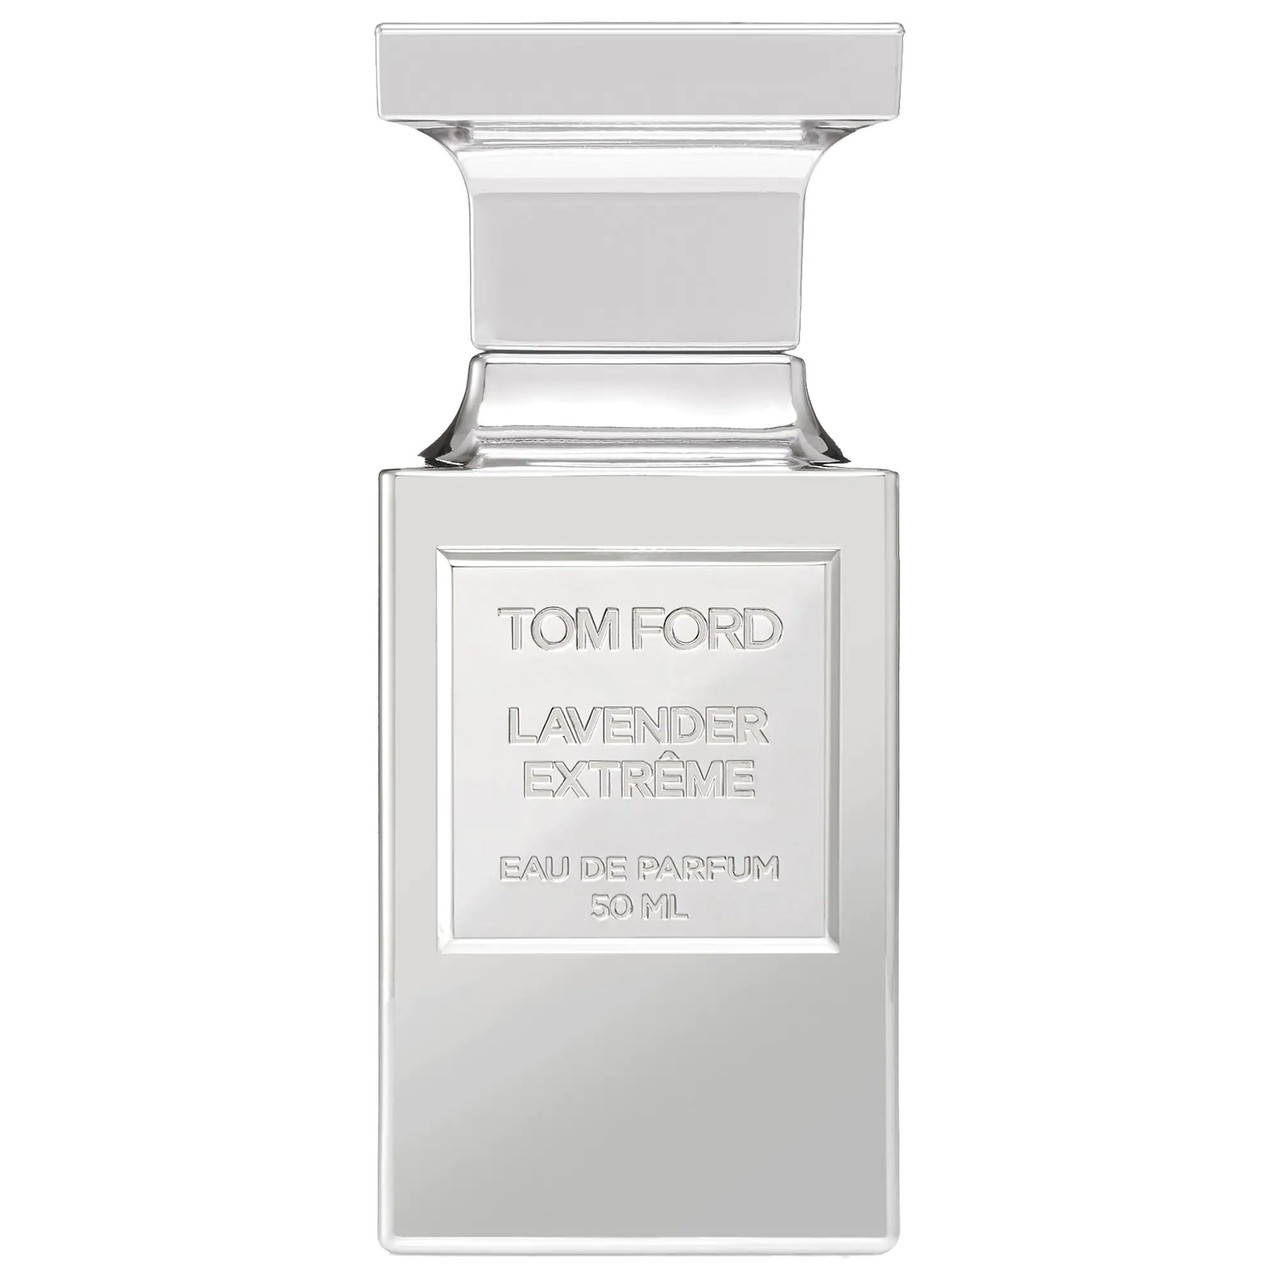 Tom Ford Lavender Extreme edp 50 ml Тестер, США